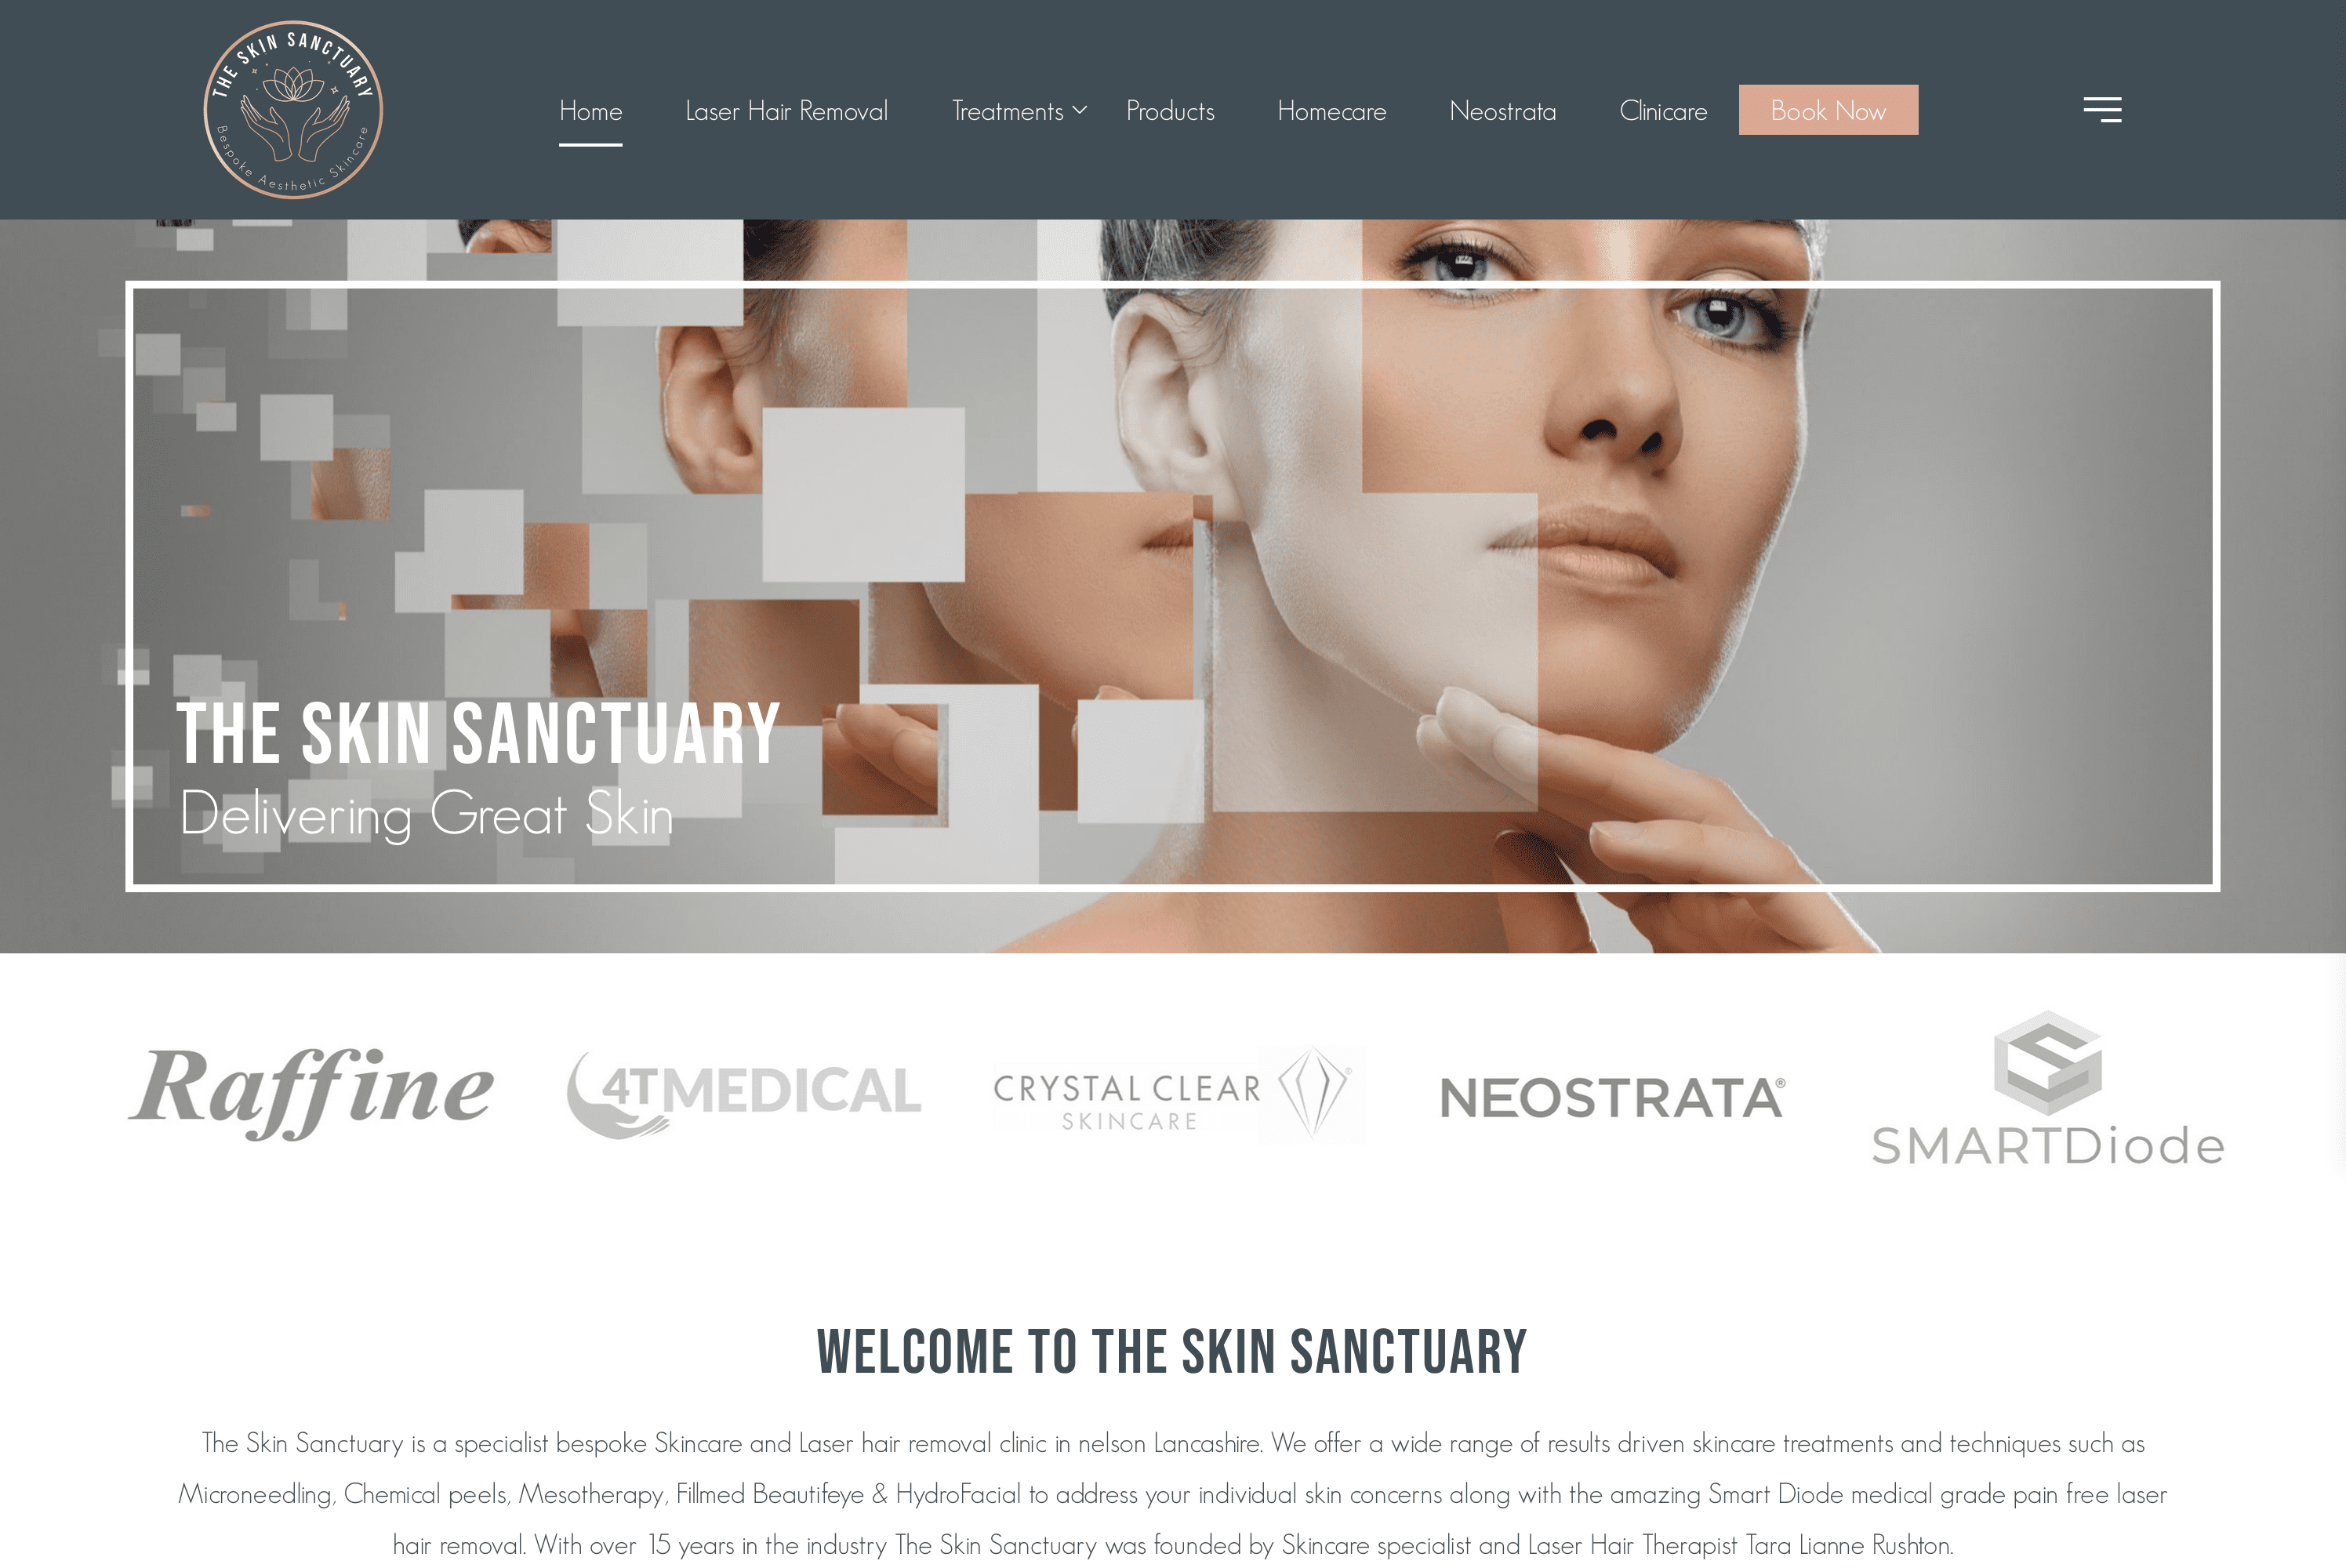 The Skin Sanctuary